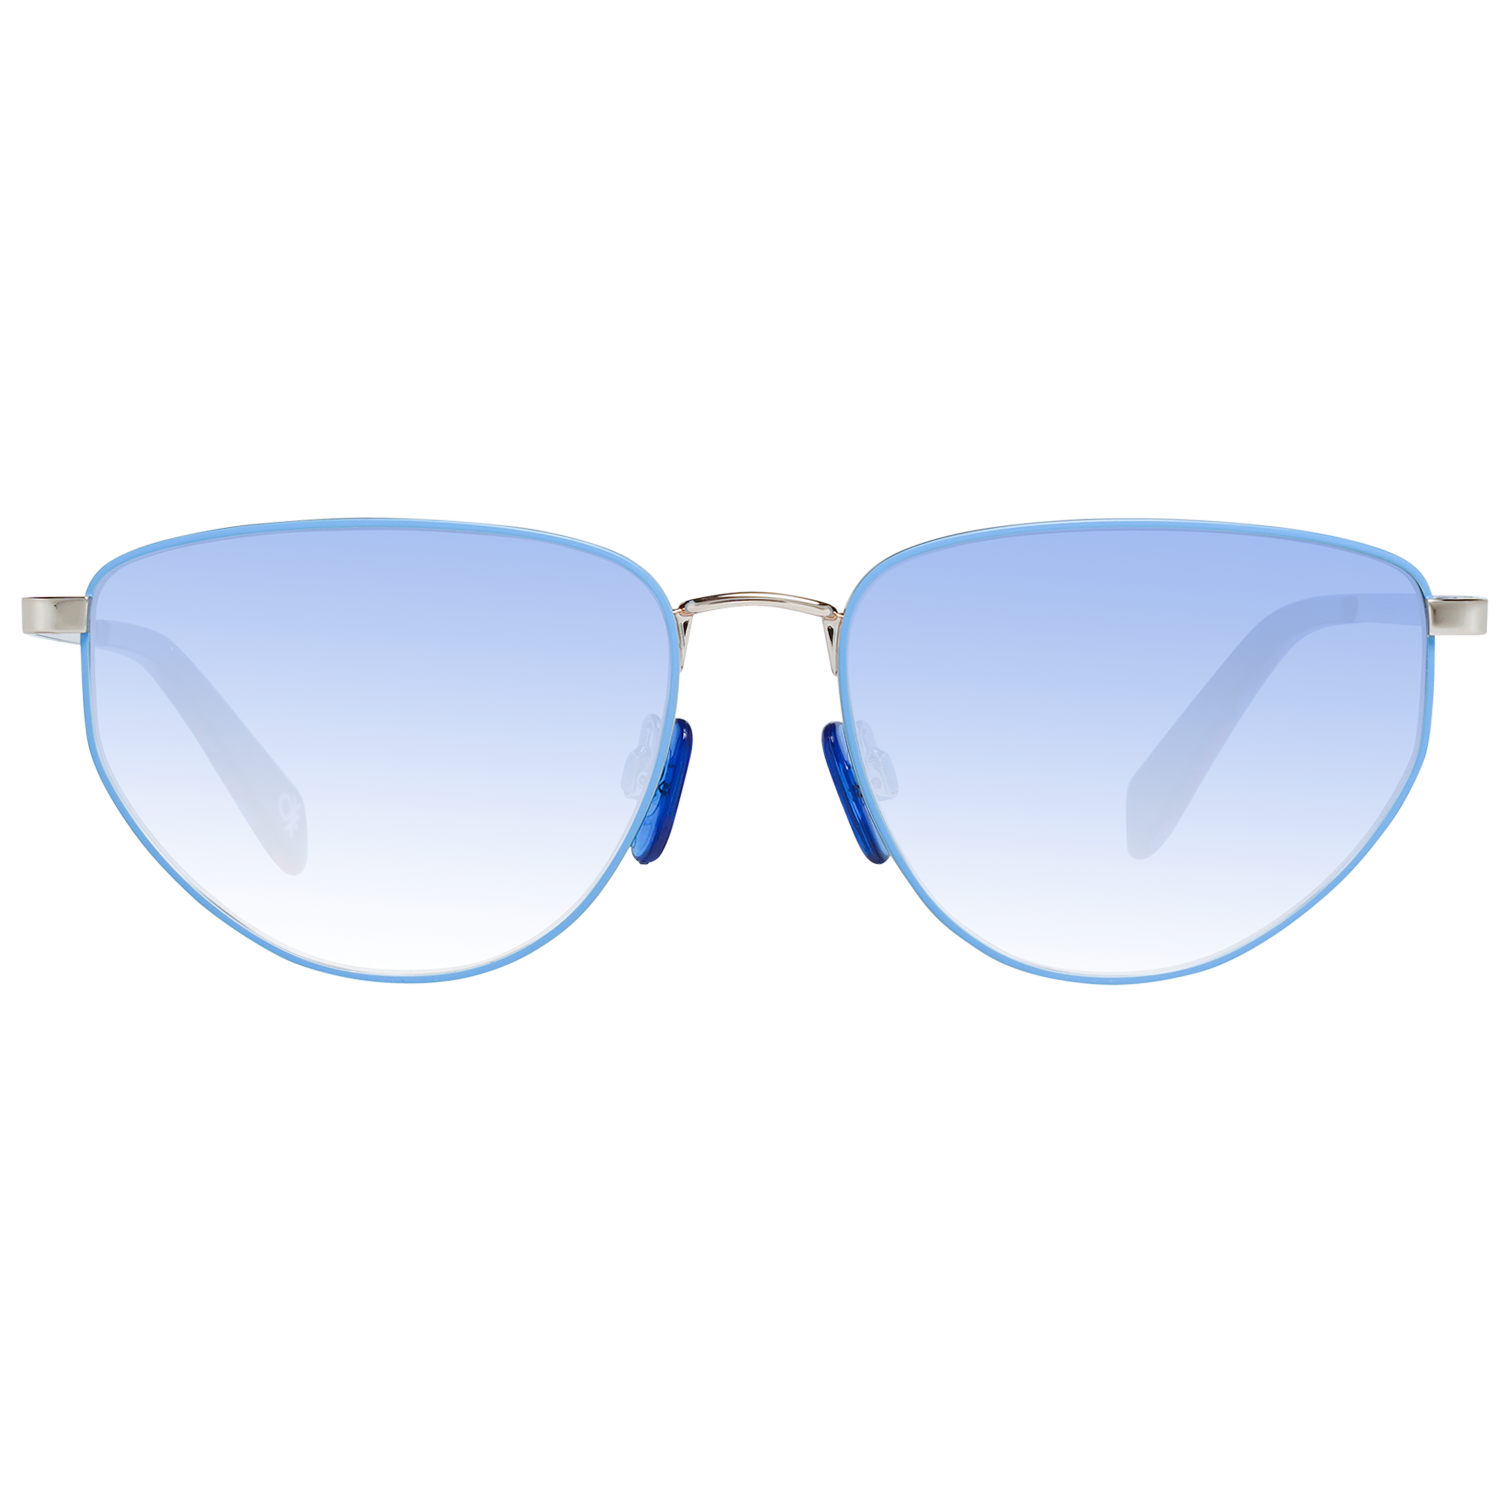 Benetton Sunglasses Benetton Sunglasses BE7033 679 56 Eyeglasses Eyewear UK USA Australia 